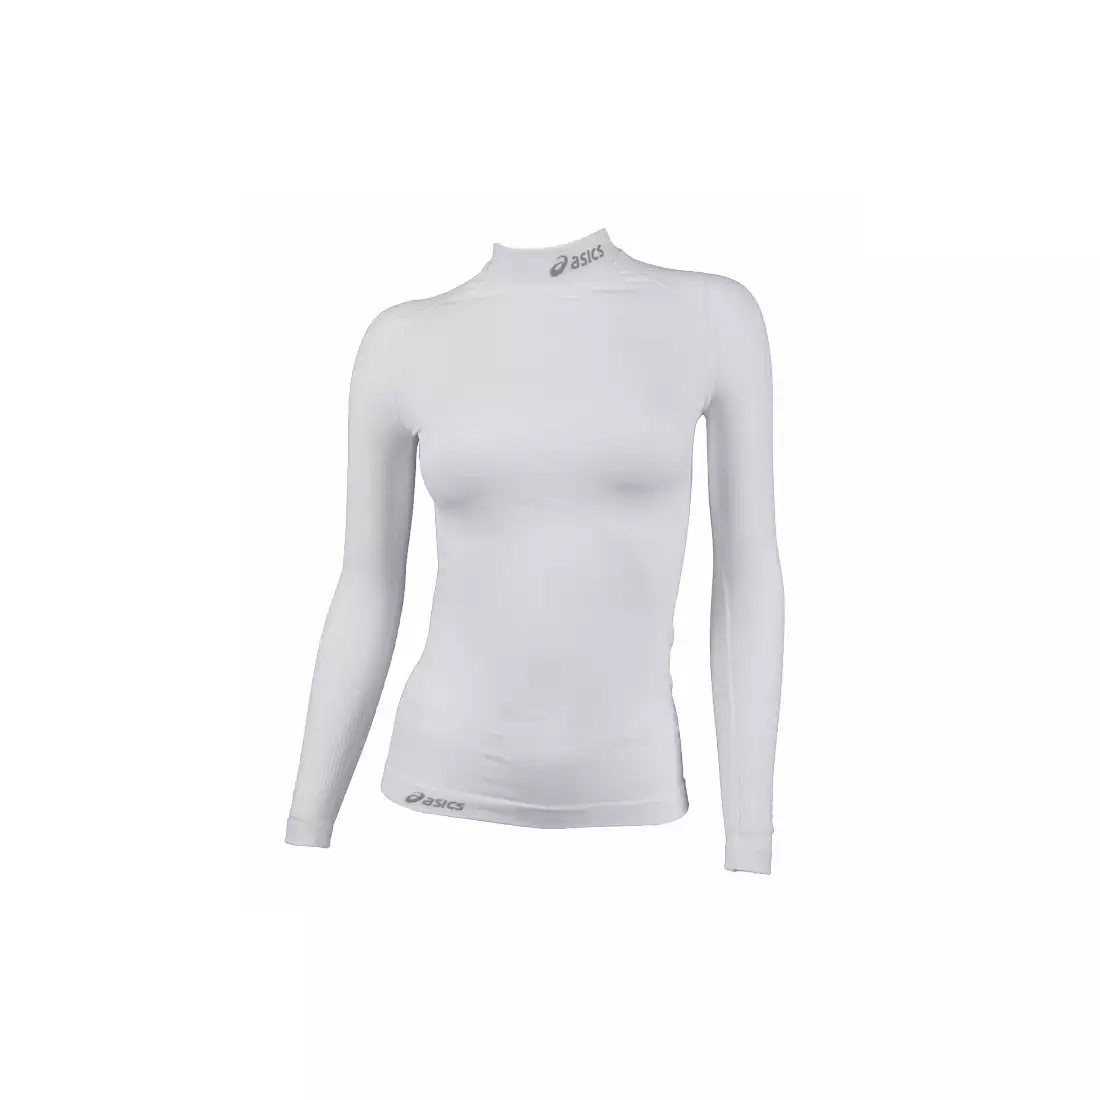 ASICS T623ZN -bielizna termoaktywna - damska koszulka